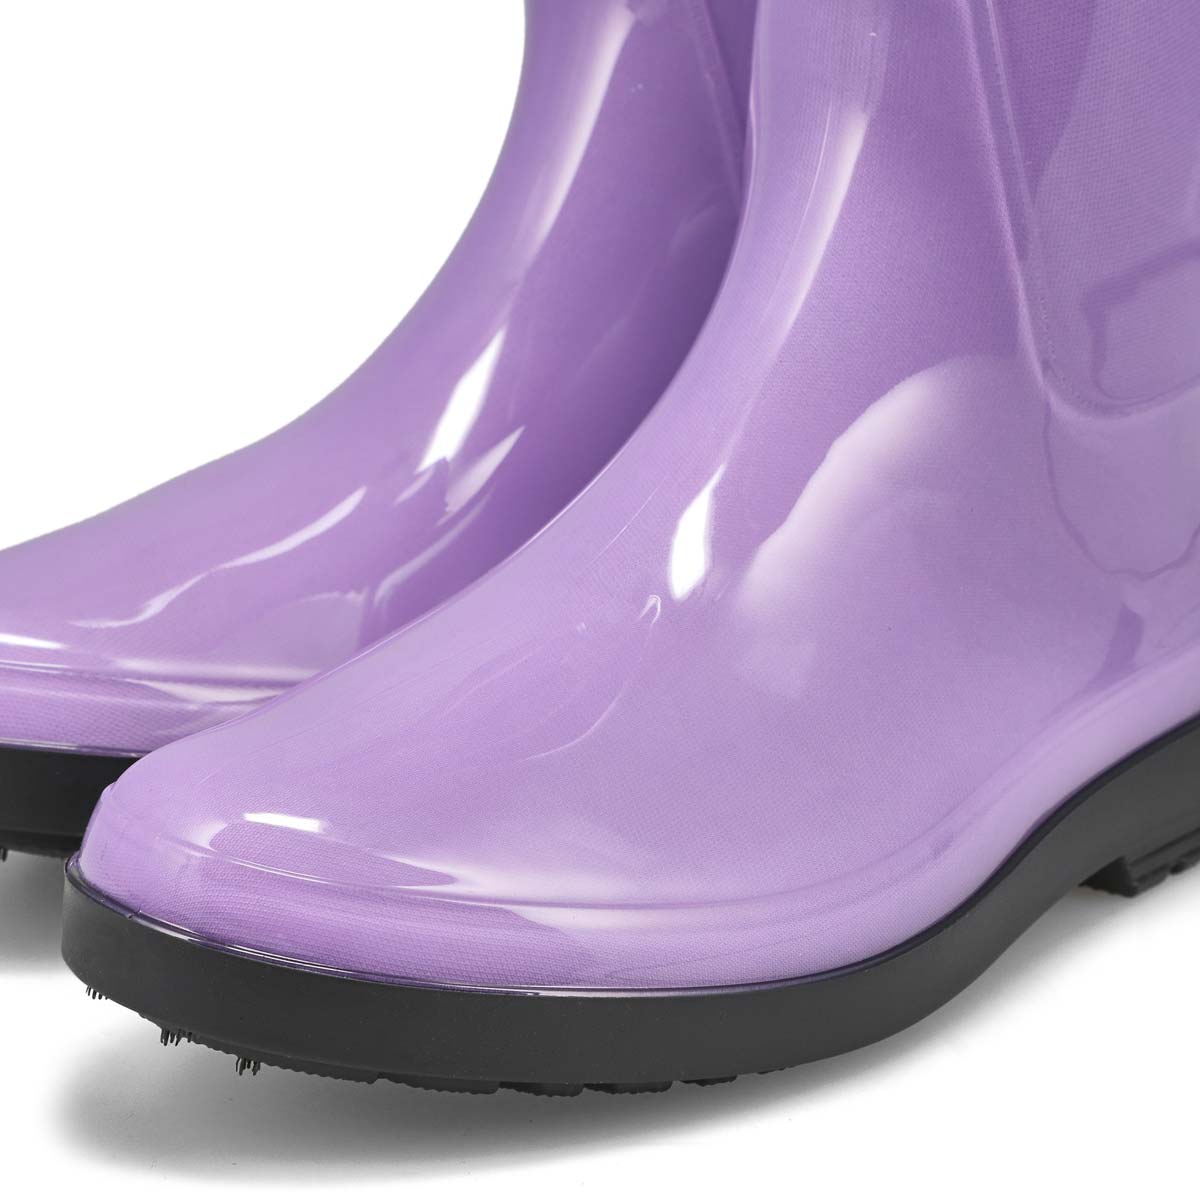 Women's Heidi 2 Rain Boot - Lavender